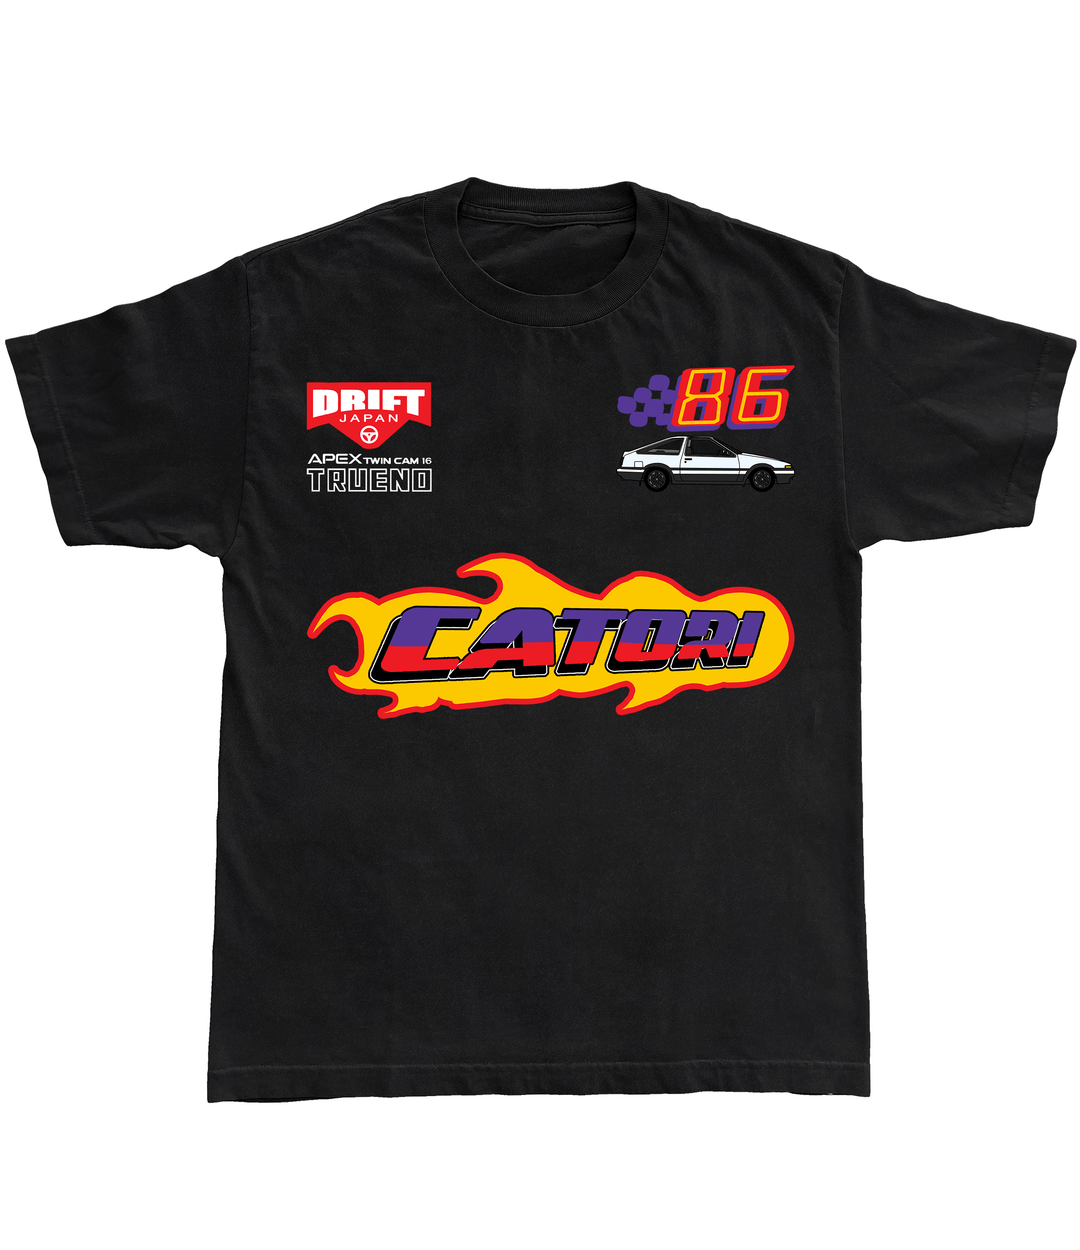 Racer T-Shirt at Catori Clothing | Graphic & Anime Tees, Hoodies & Sweatshirts 